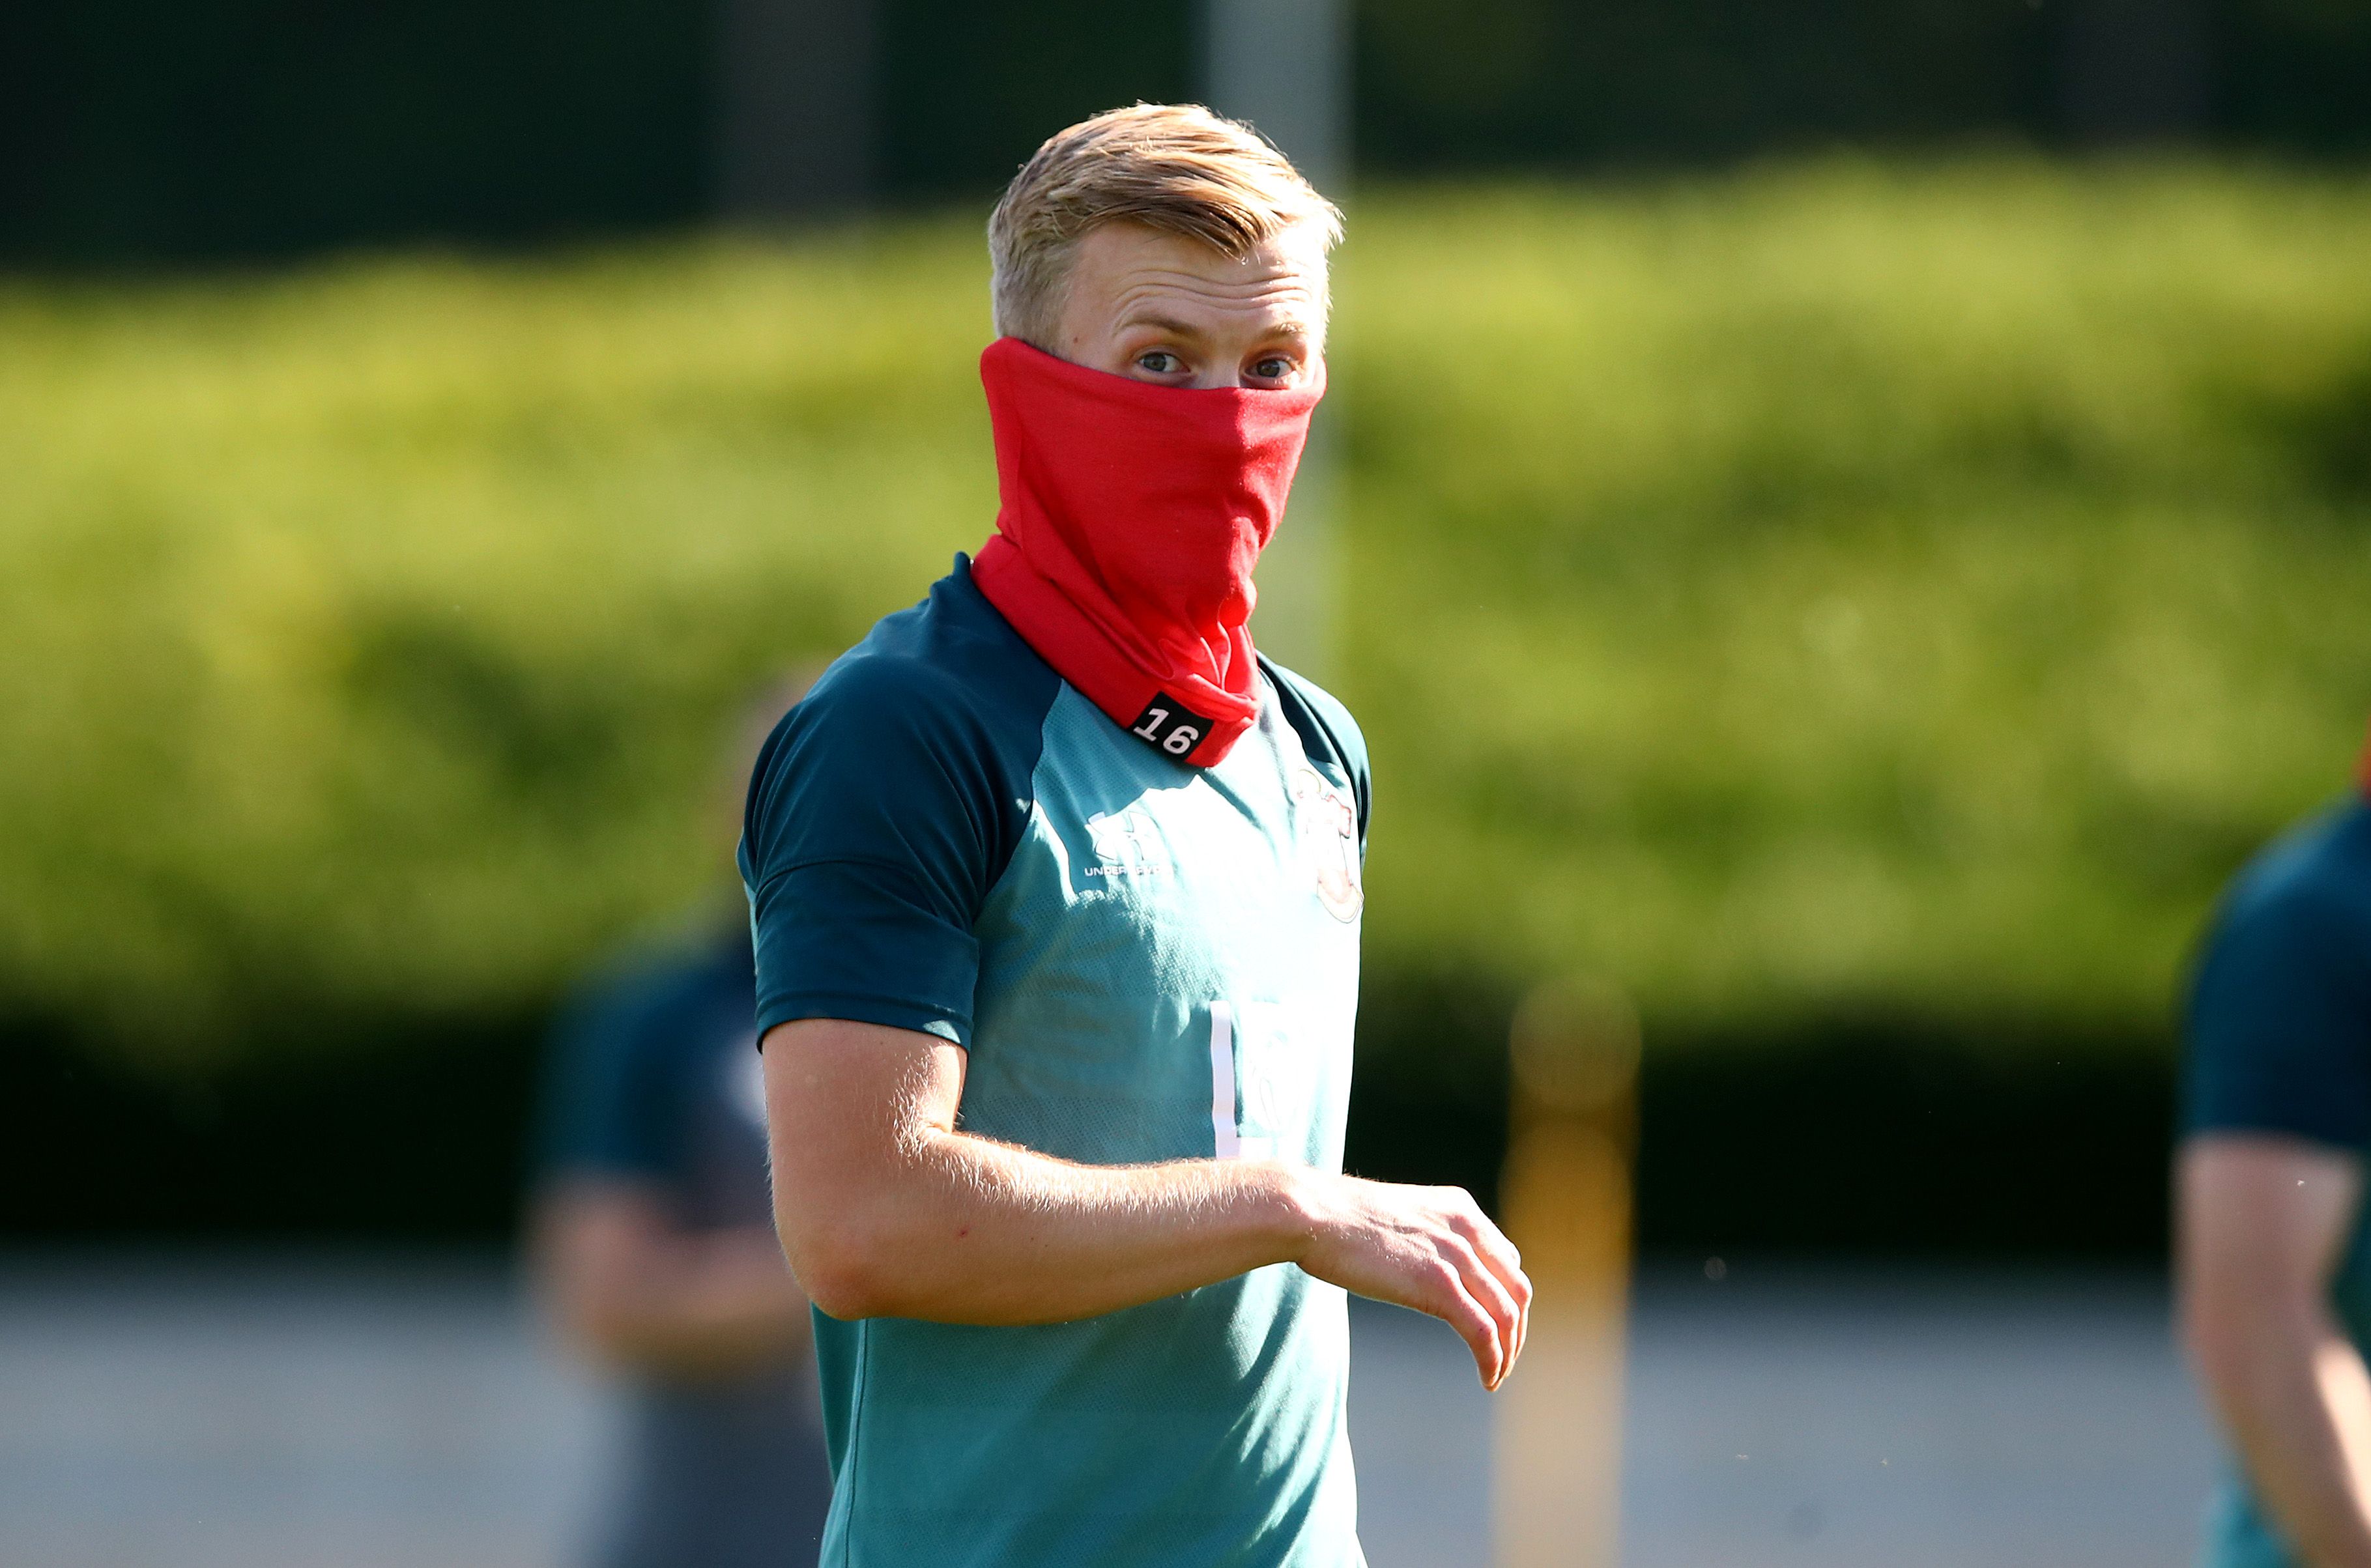 Southampton player with mask